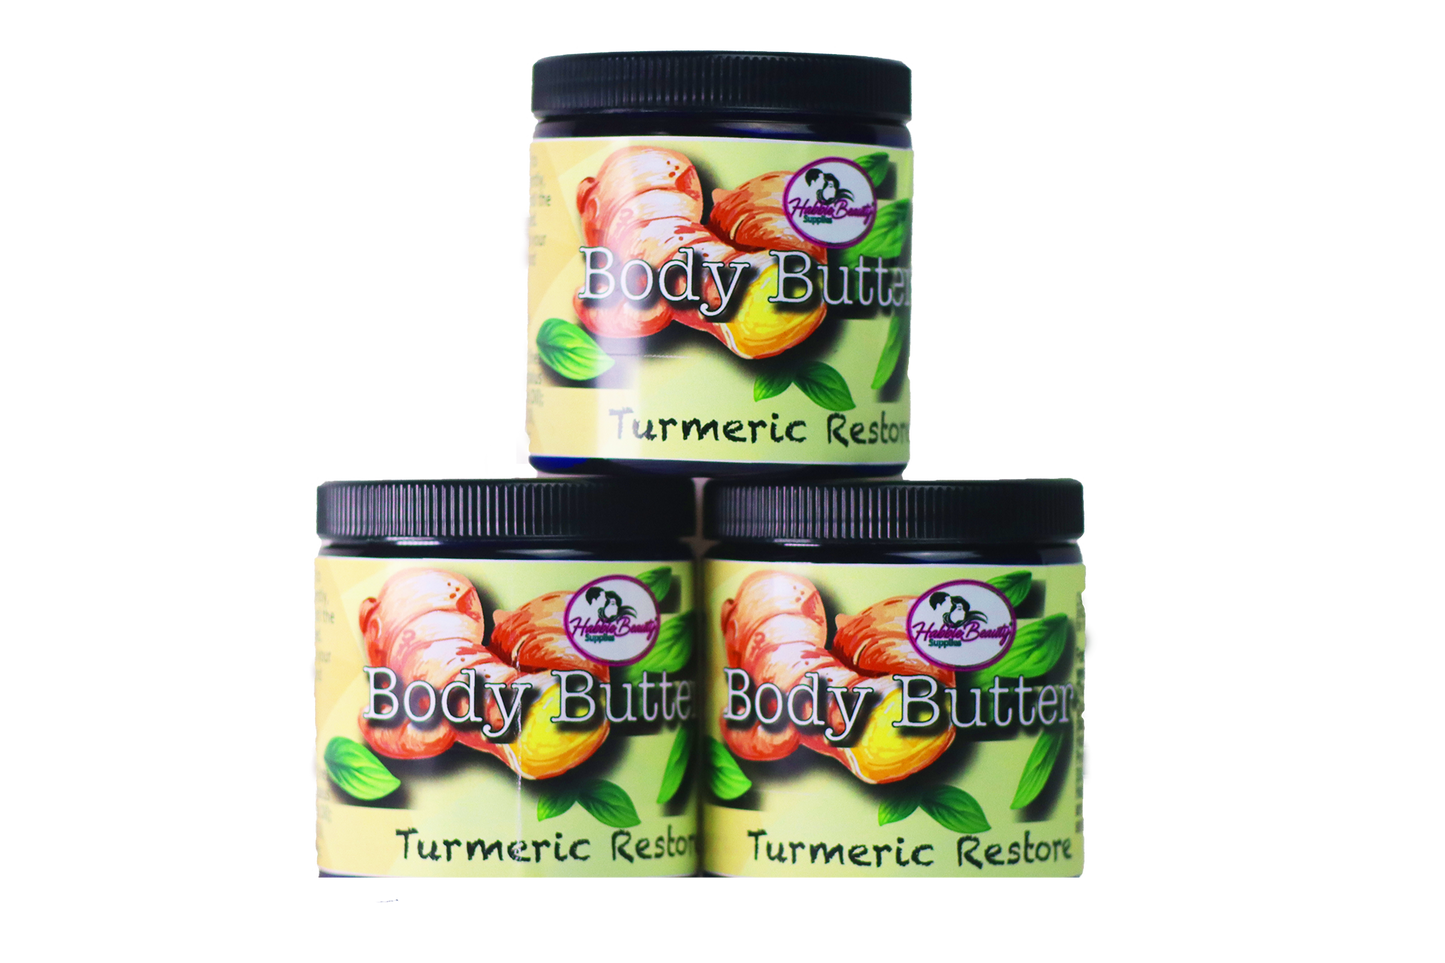 Whipped Turmeric Body Butter 100% Organic | Habbie Beauty Supplies - Habbie Enterprise